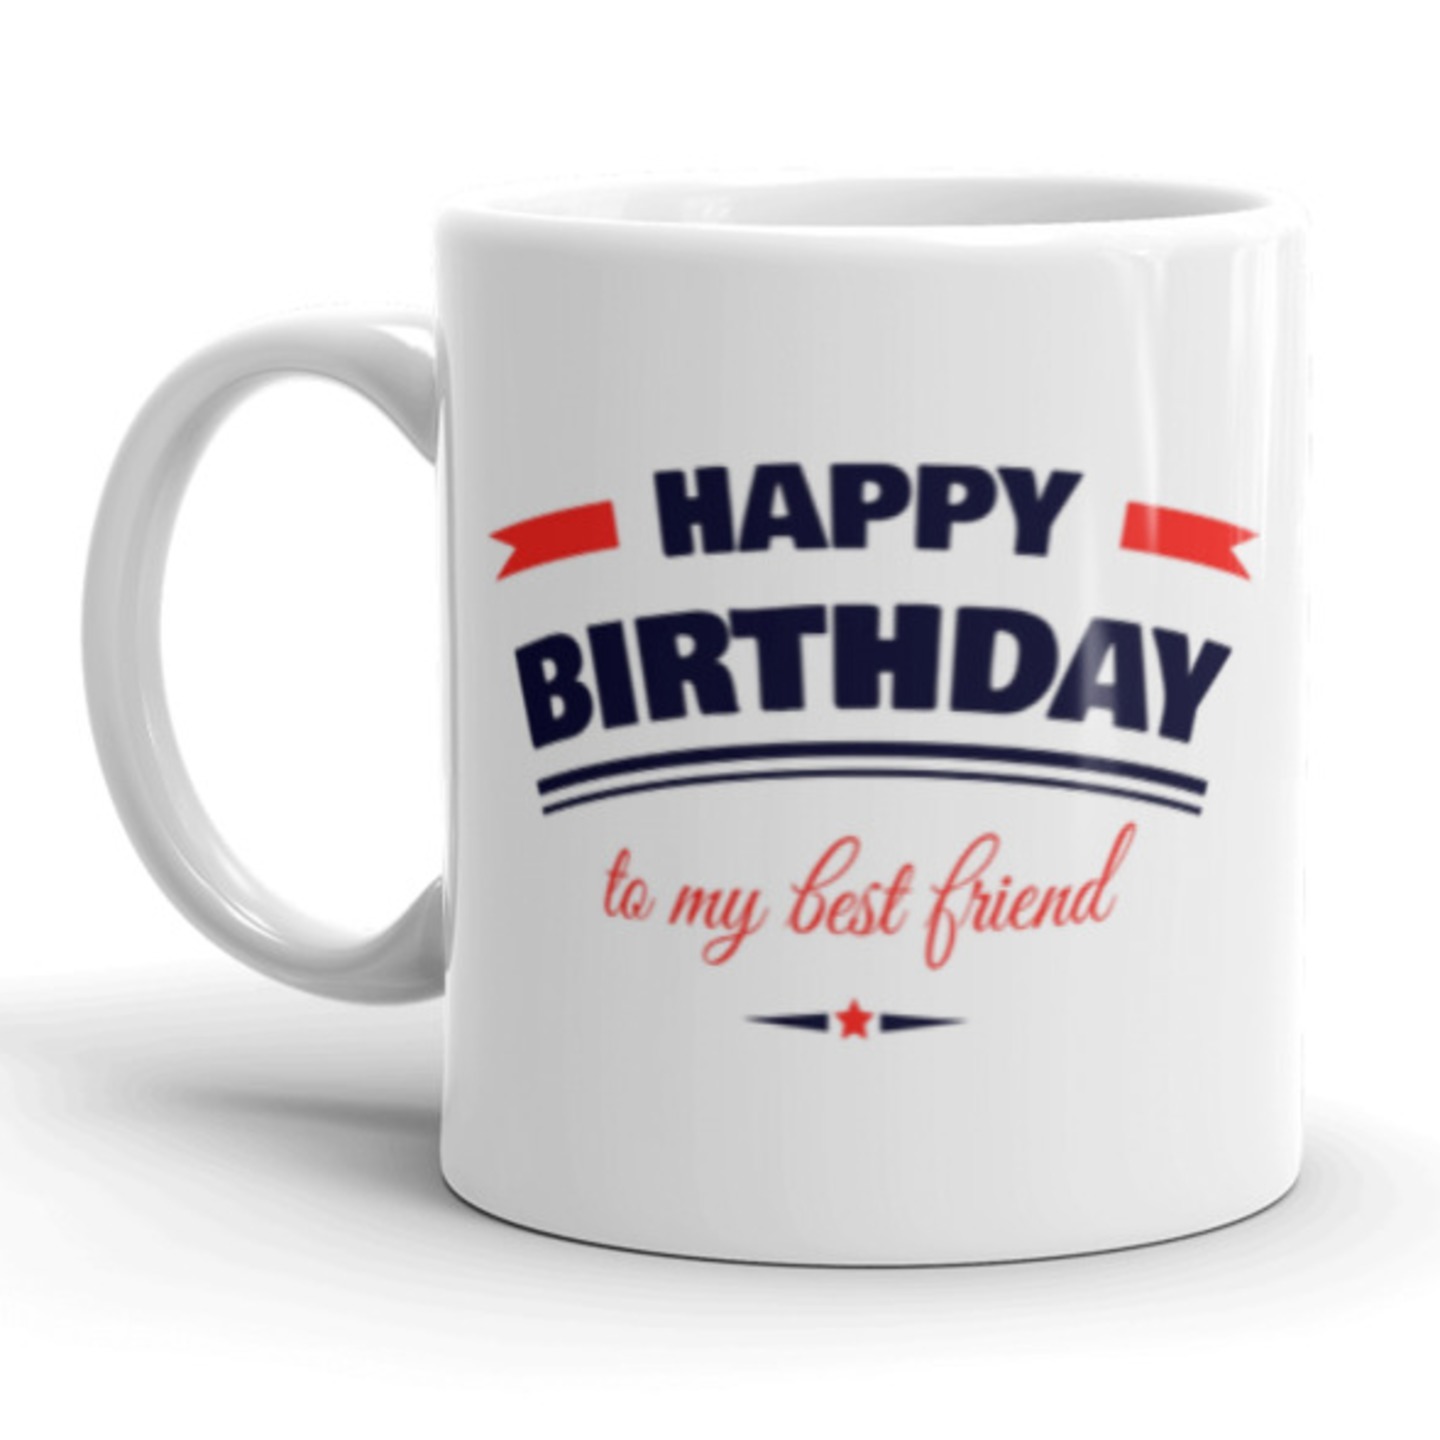 Ceramic Mug - Happy birthday to my best friend